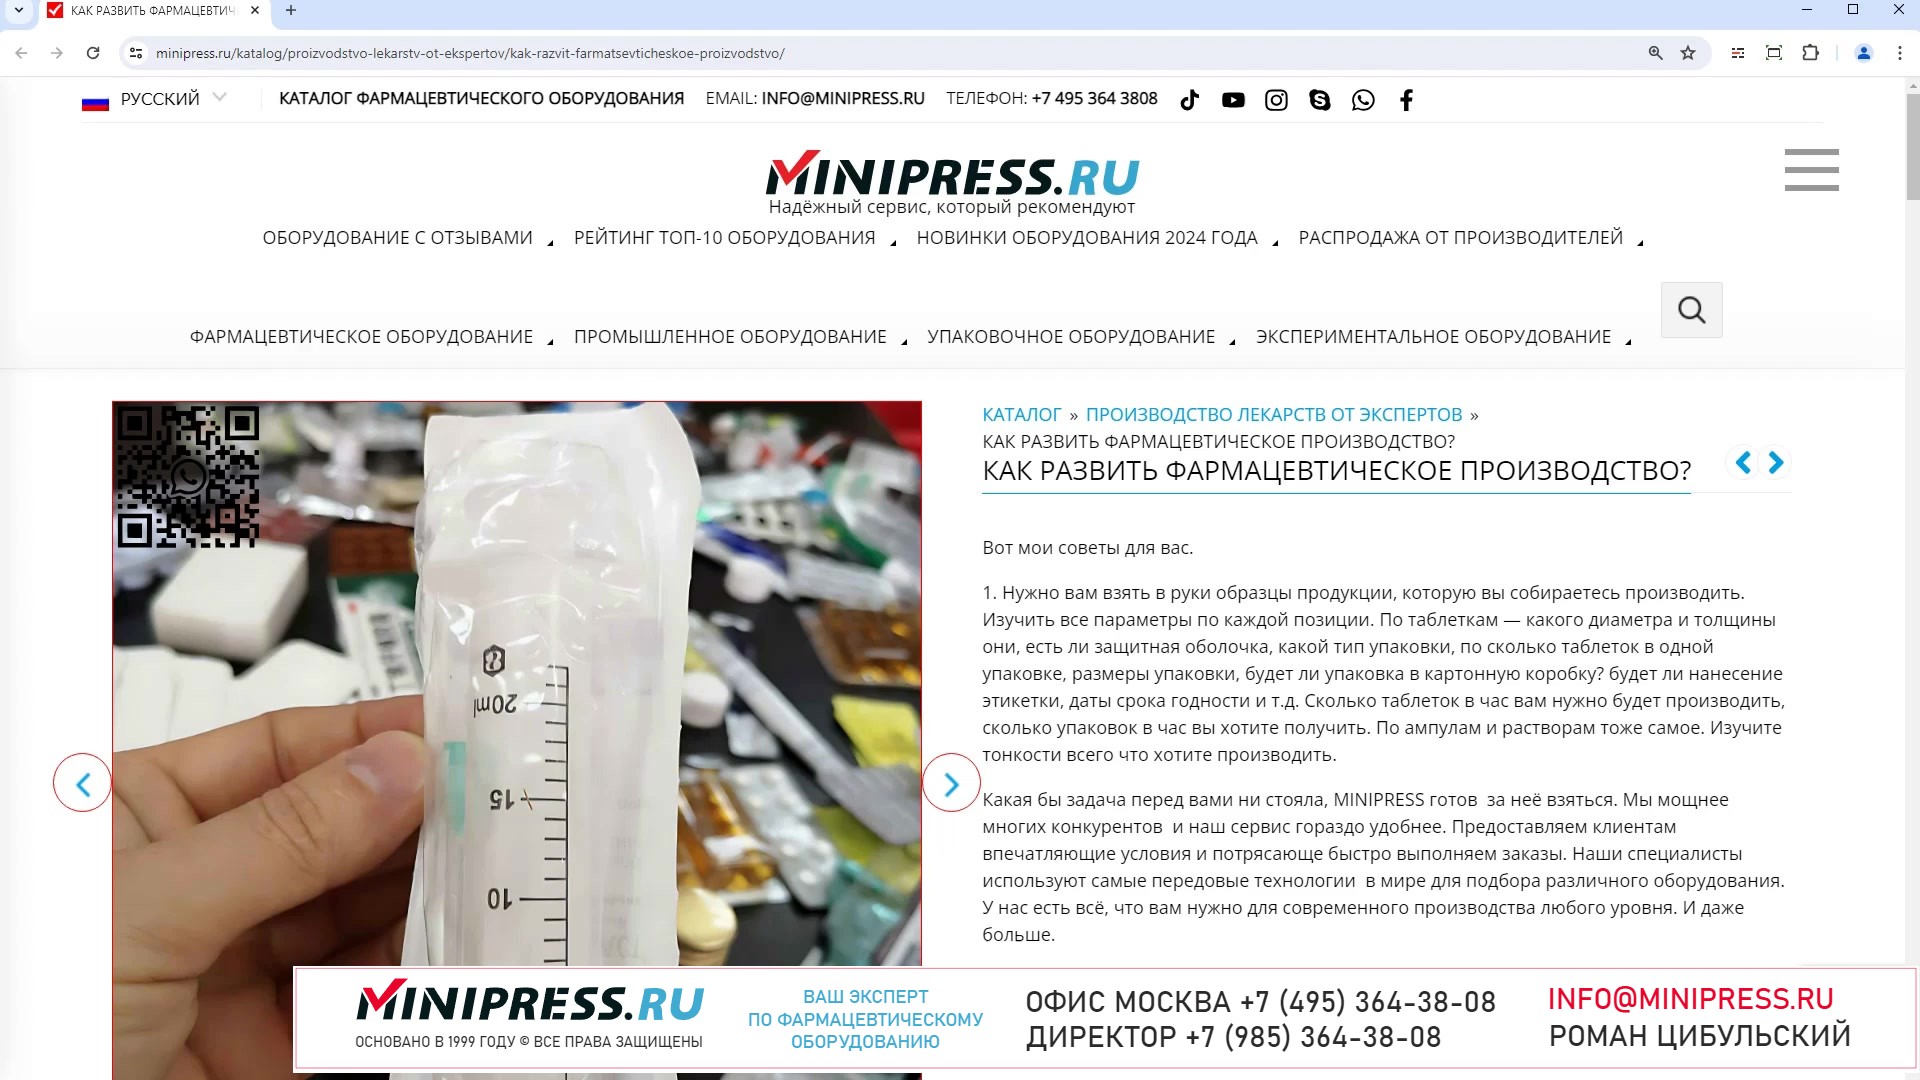 Minipress.ru Как развить фармацевтическое производство